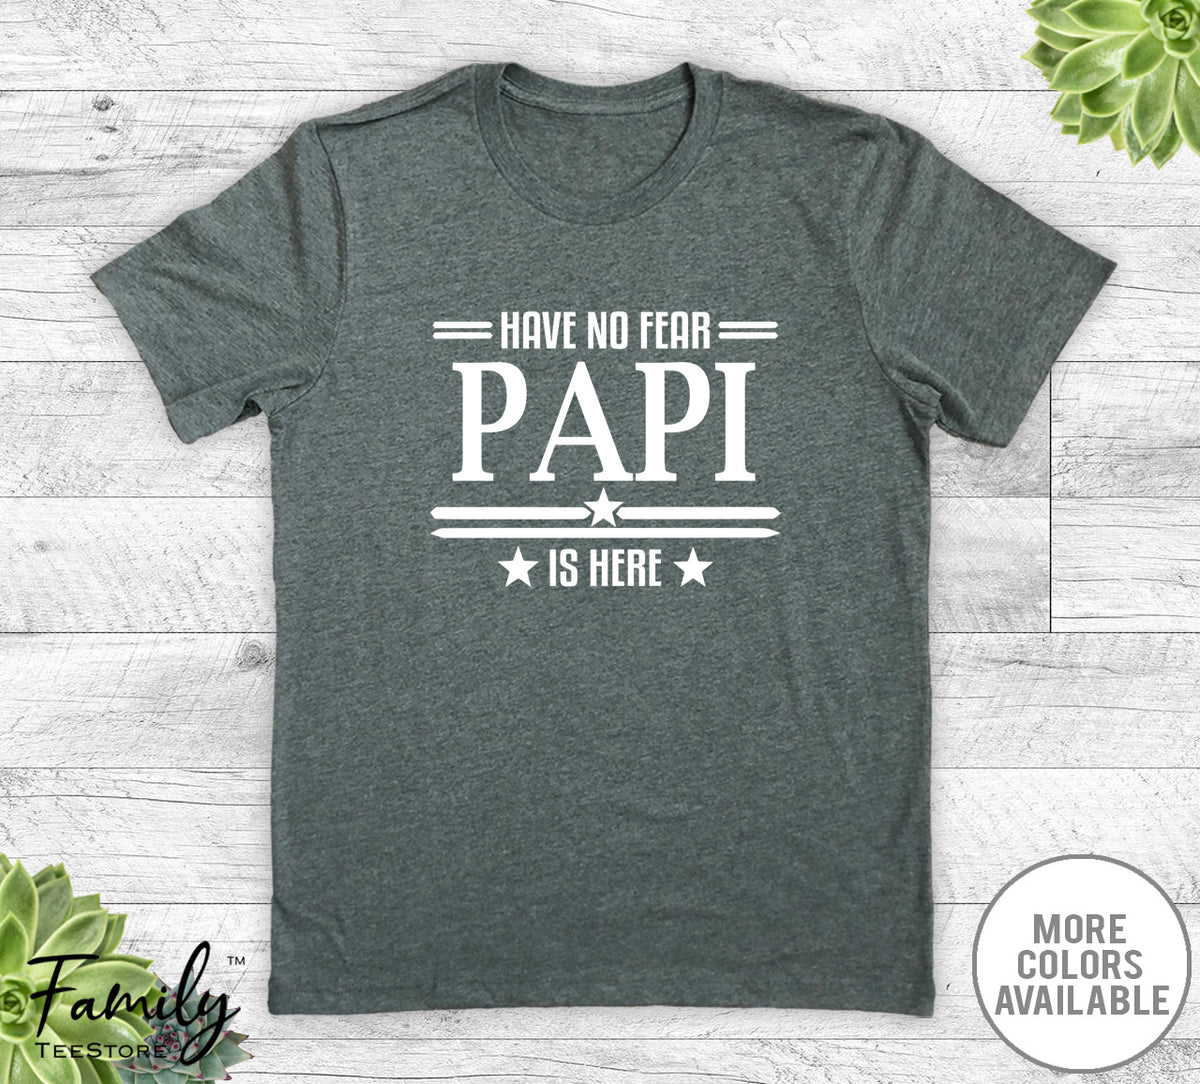 Have No Fear Papi Is Here - Unisex T-shirt - Papi Shirt - Papi Gift - familyteeprints